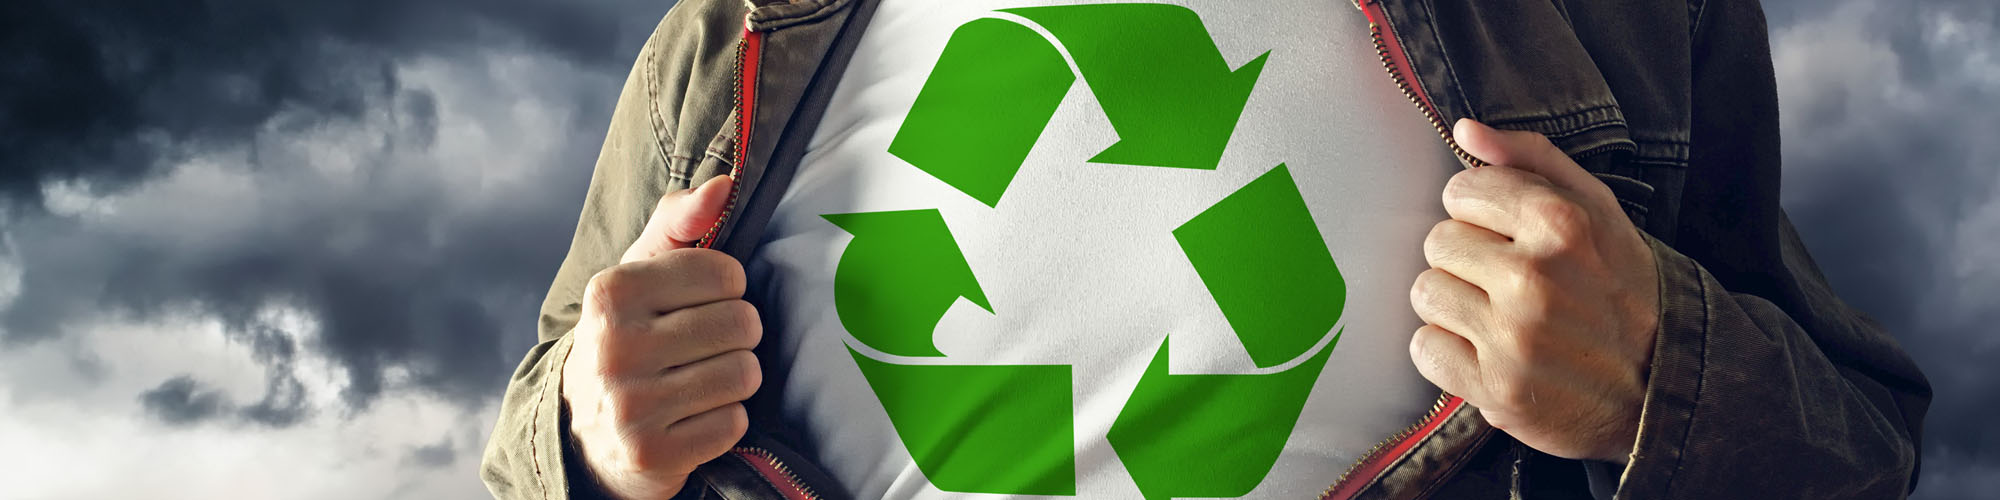 Recycling symbol on a man's white shirt future